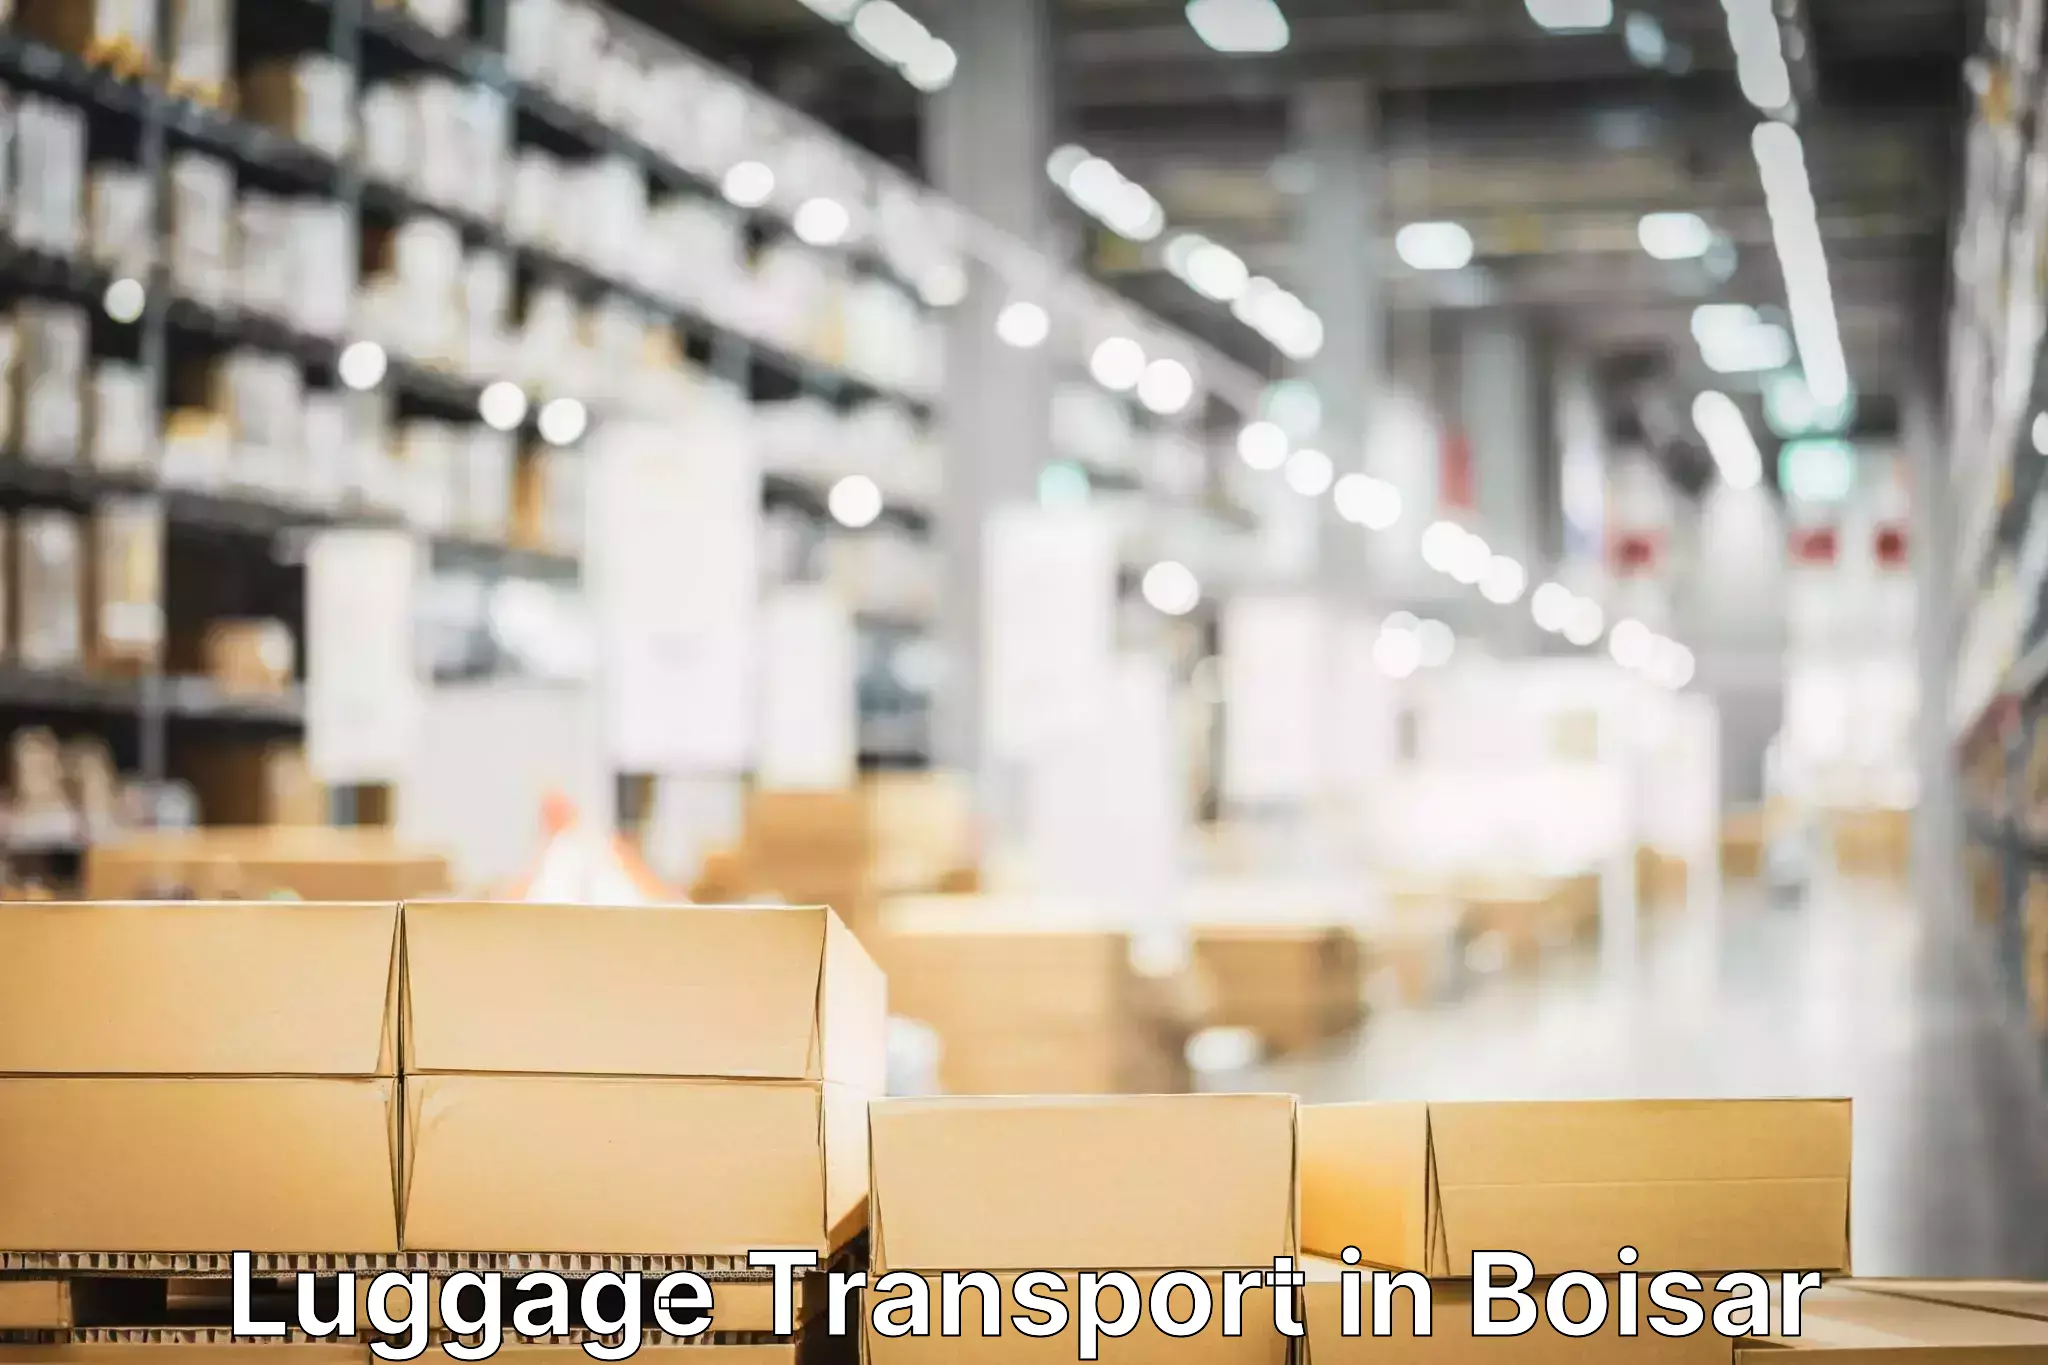 Baggage transport network in Boisar